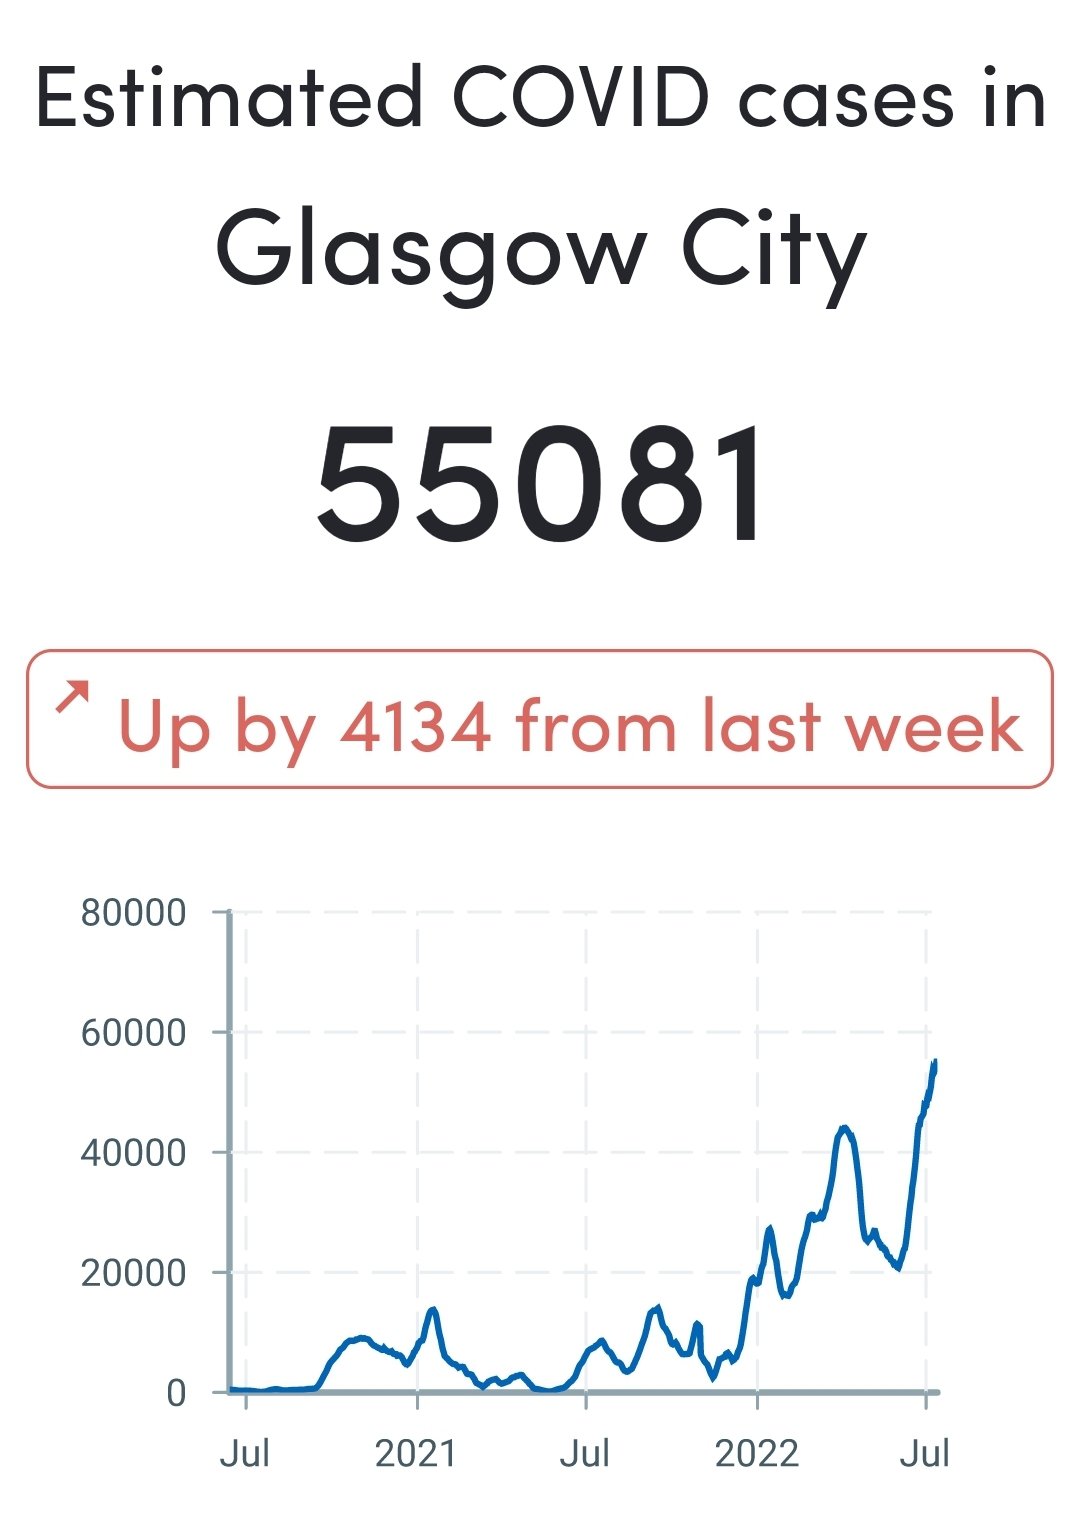 Covid cases in Glasgow City 55081 according to ZOE app.